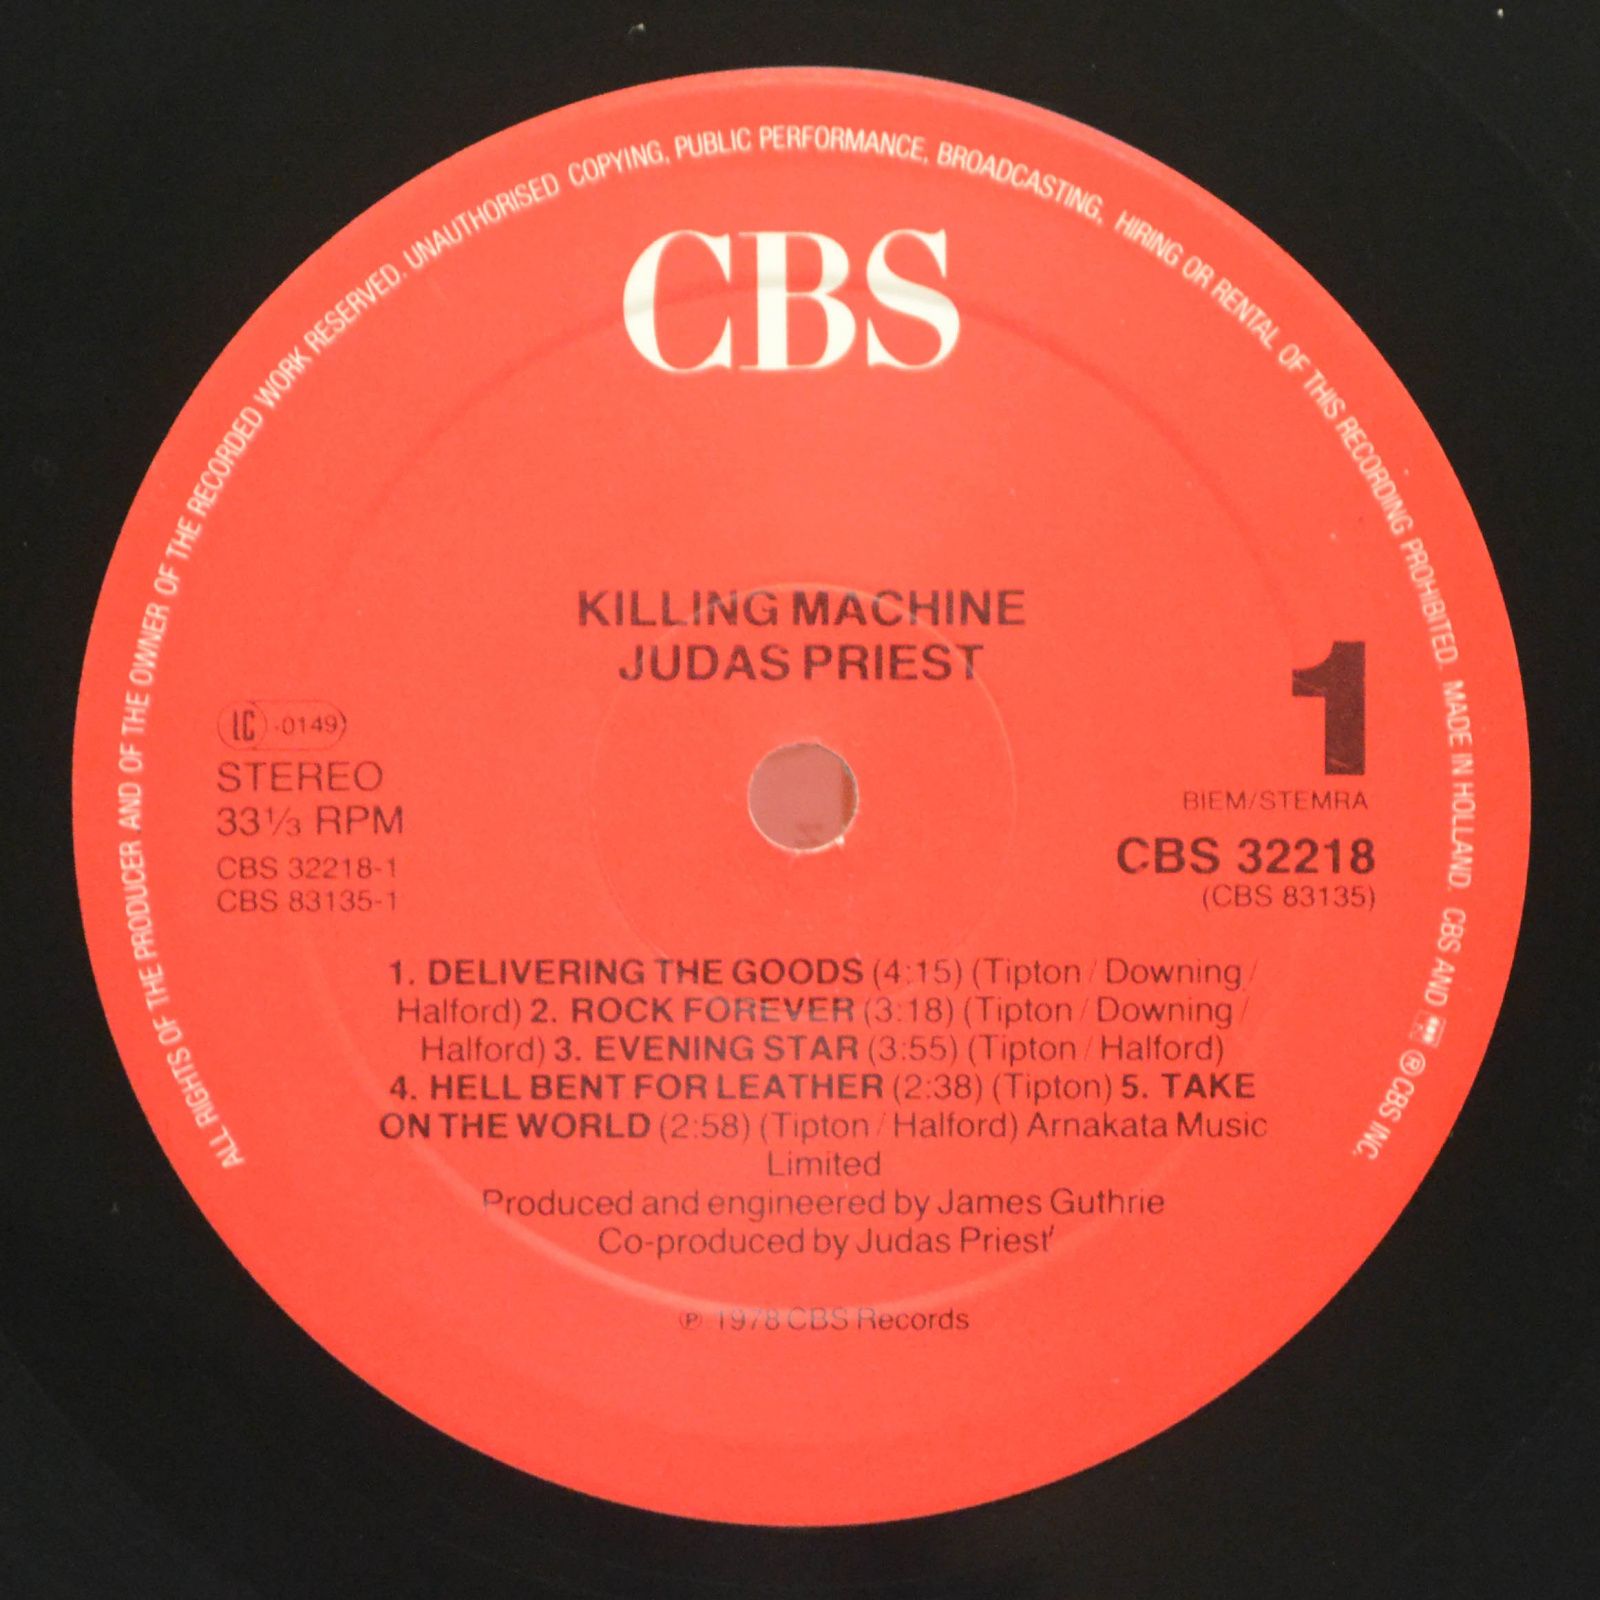 Judas Priest — Killing Machine, 1978